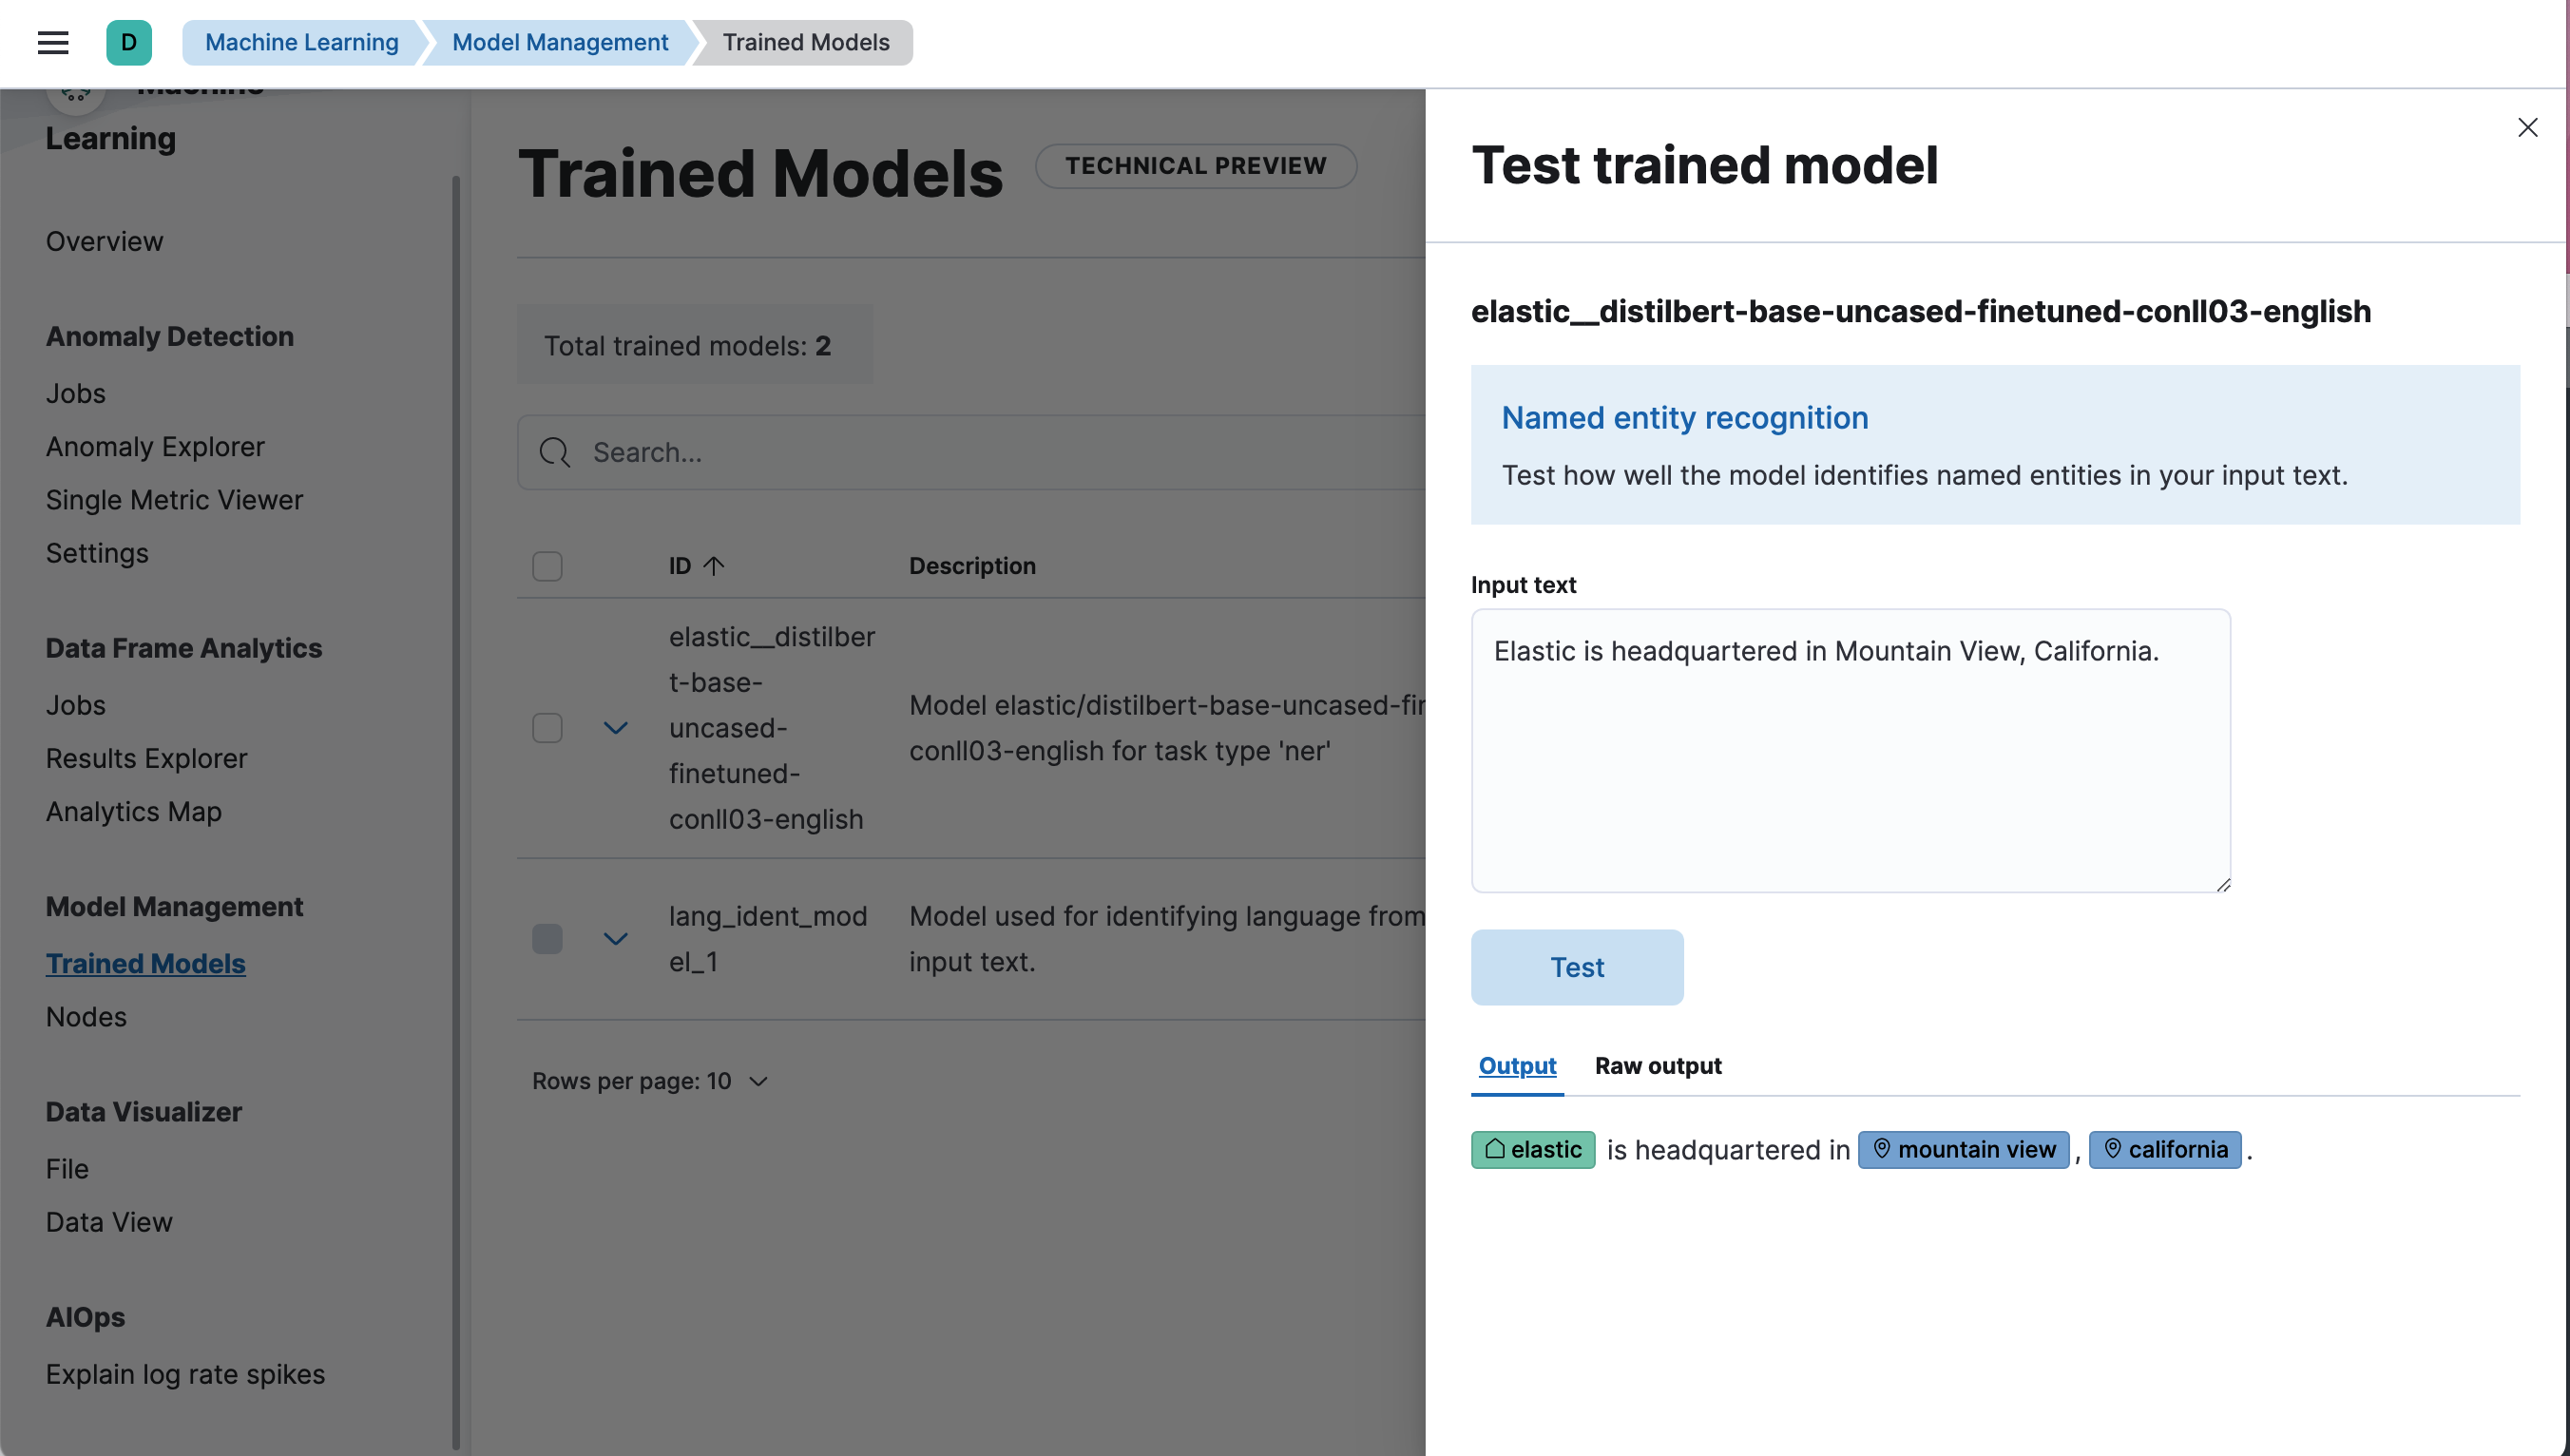 Test trained model UI